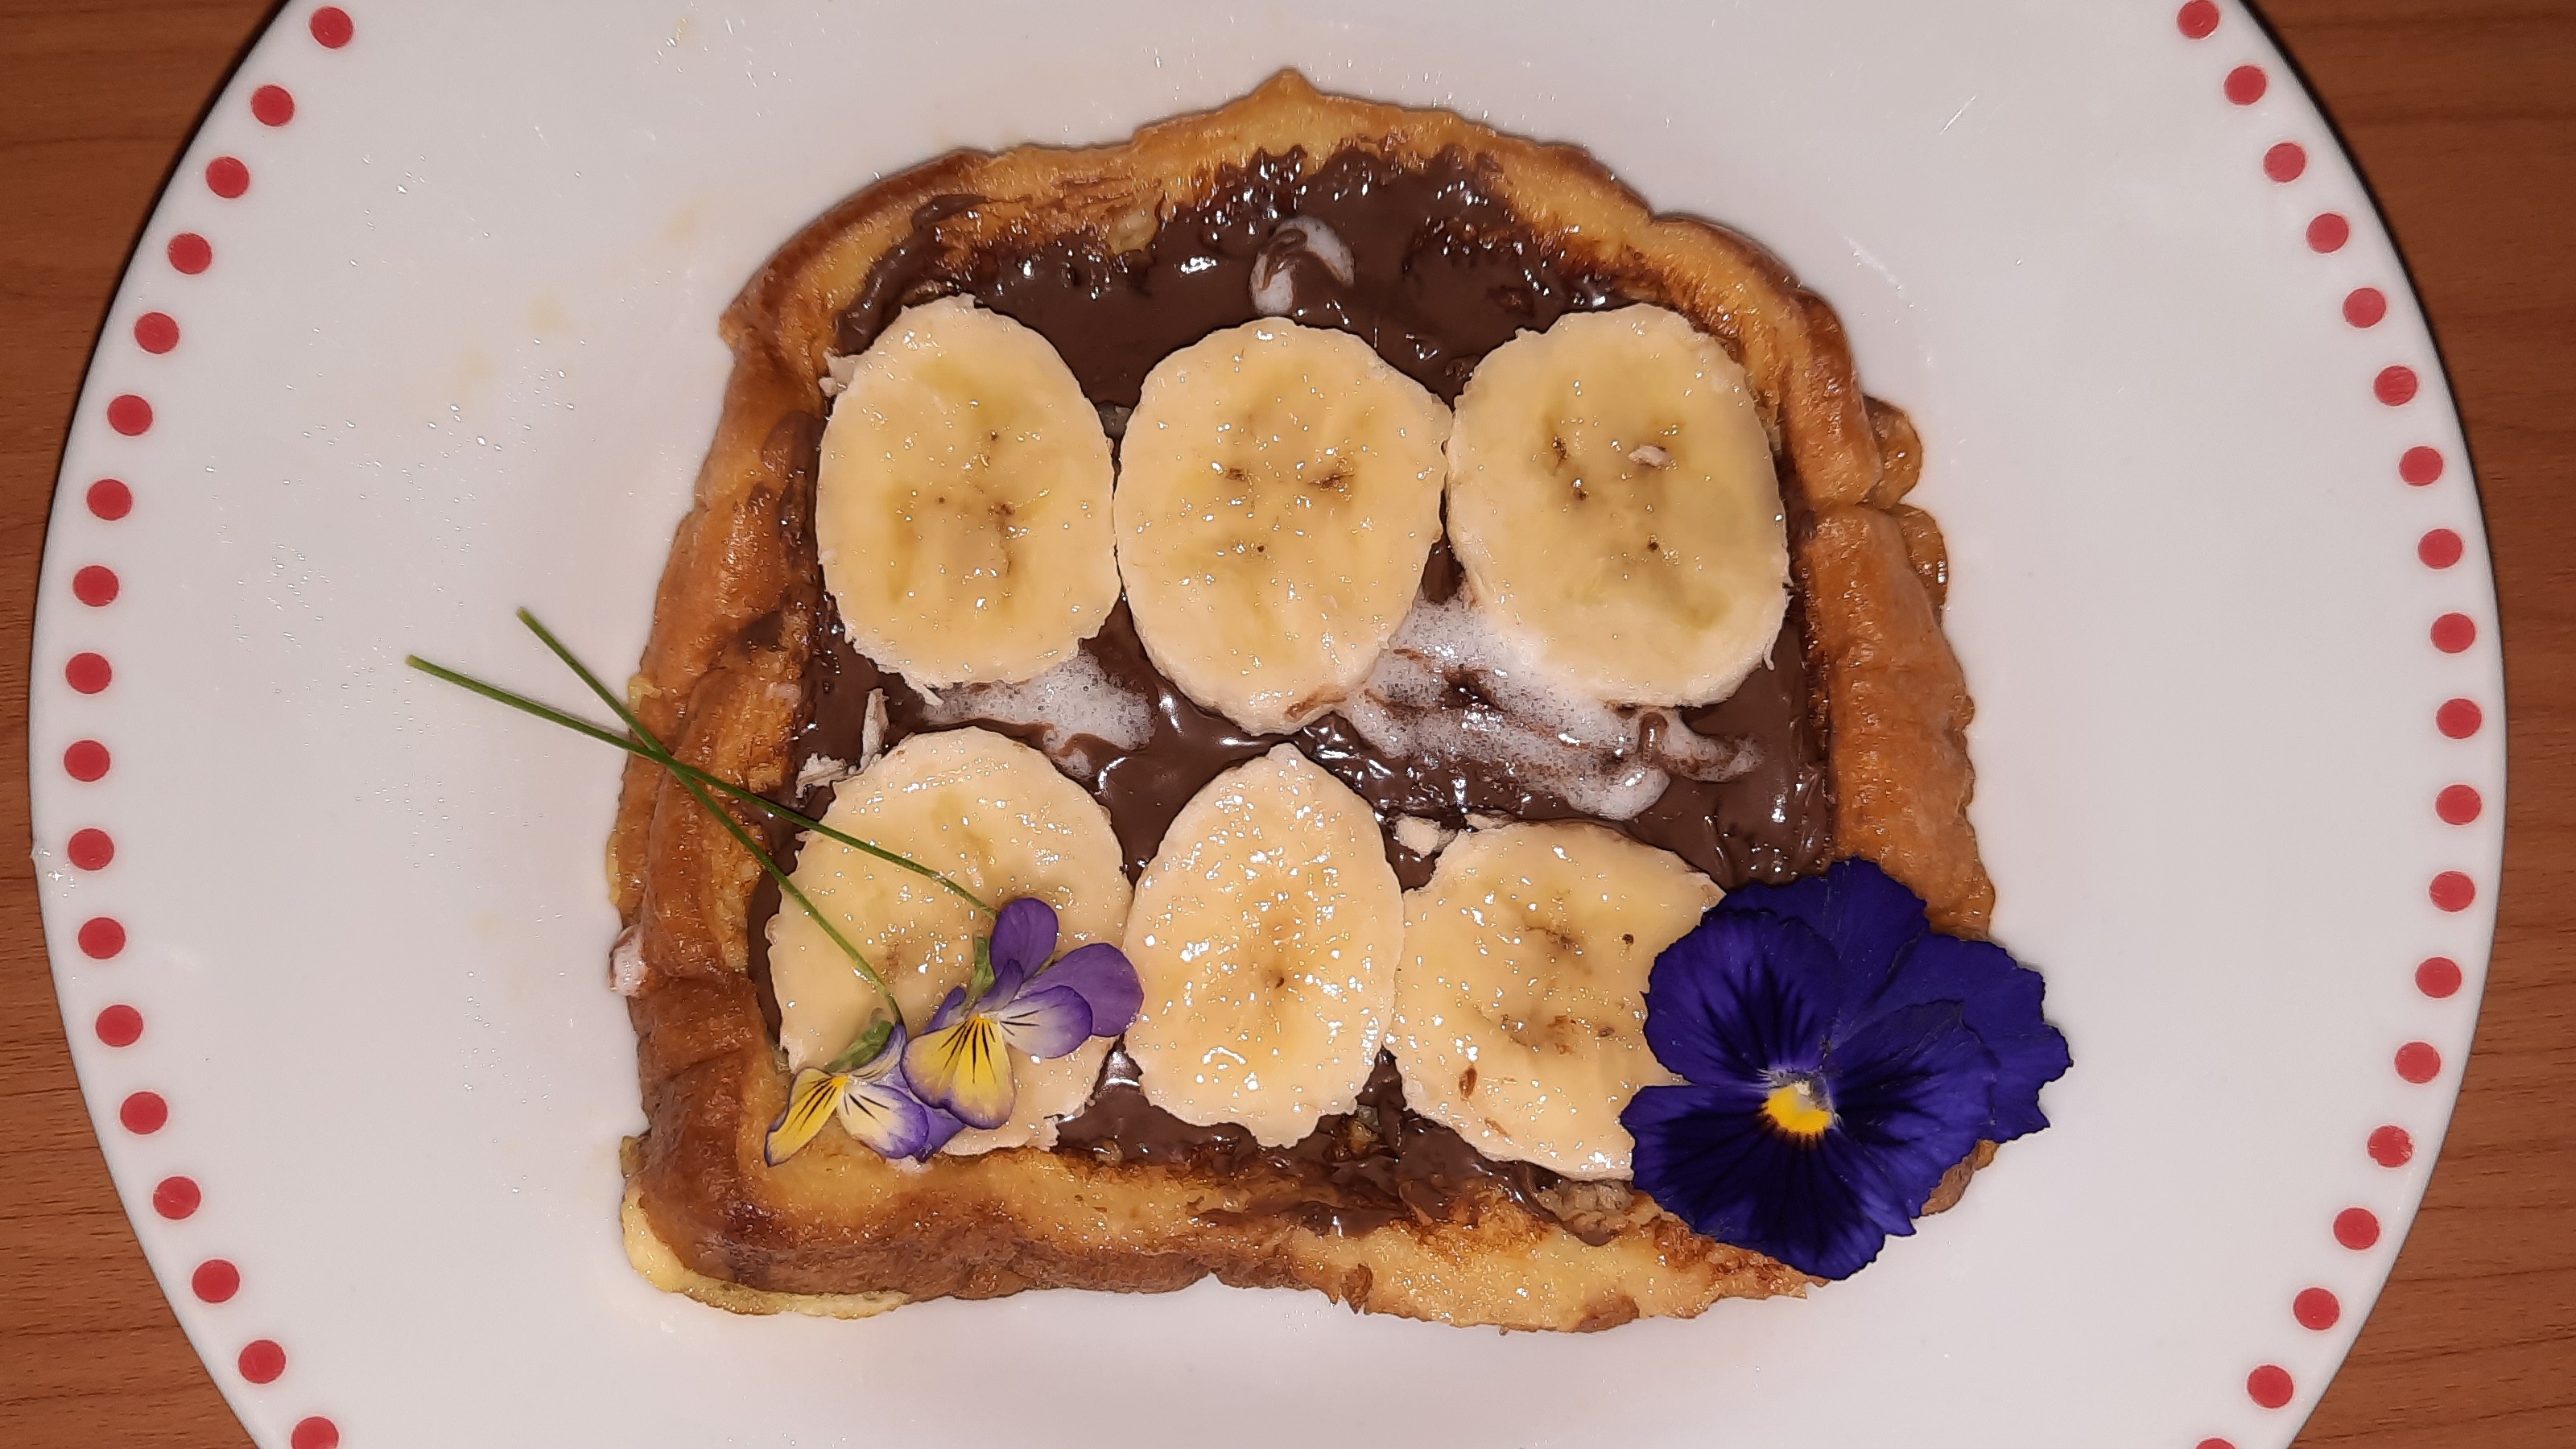 Nutella &amp; Banana Brioche French Toast Recipe by Maklano